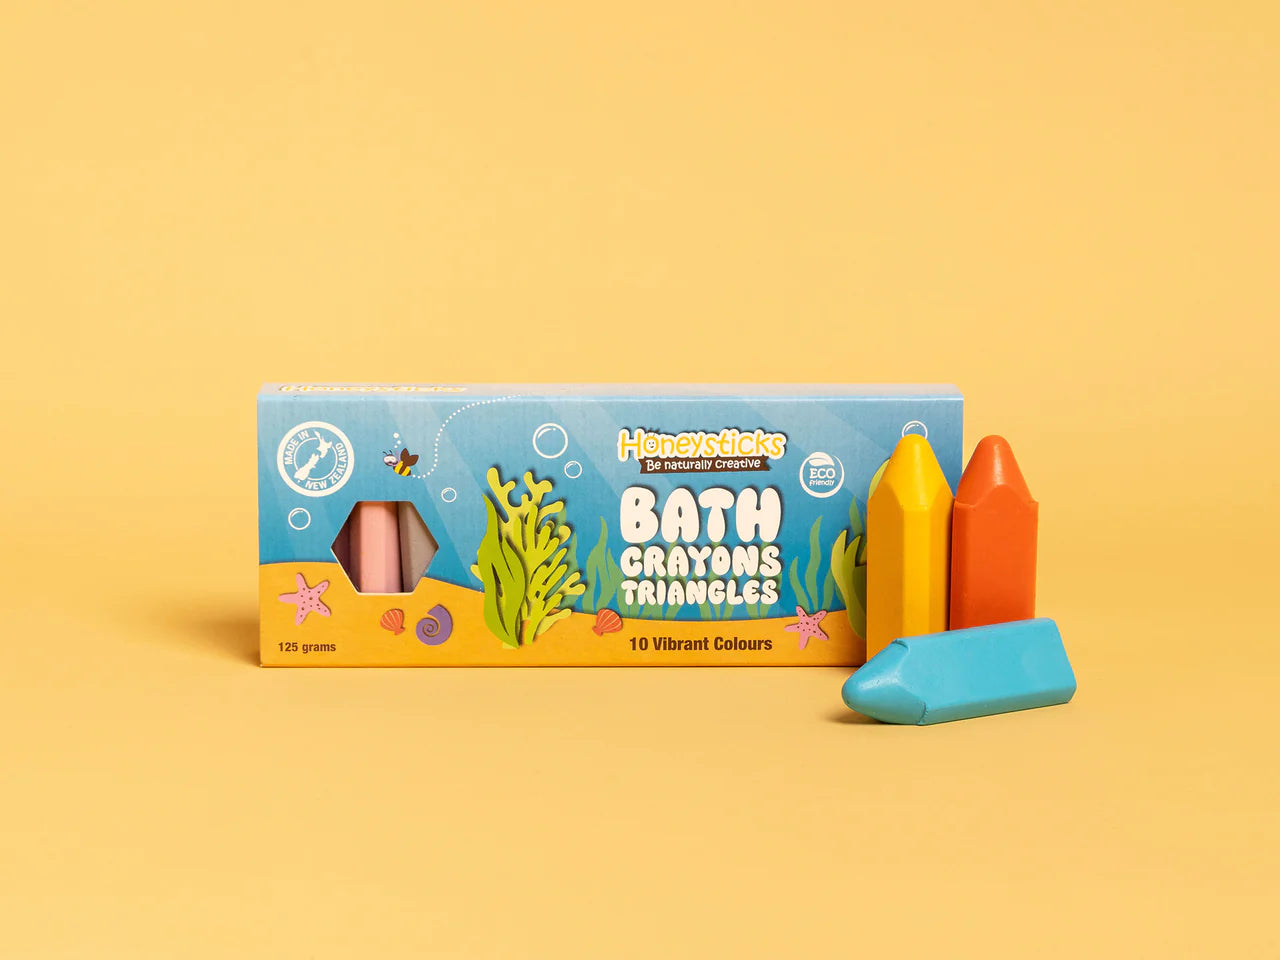 Honeysticks | Soy Bath Crayon Triangles